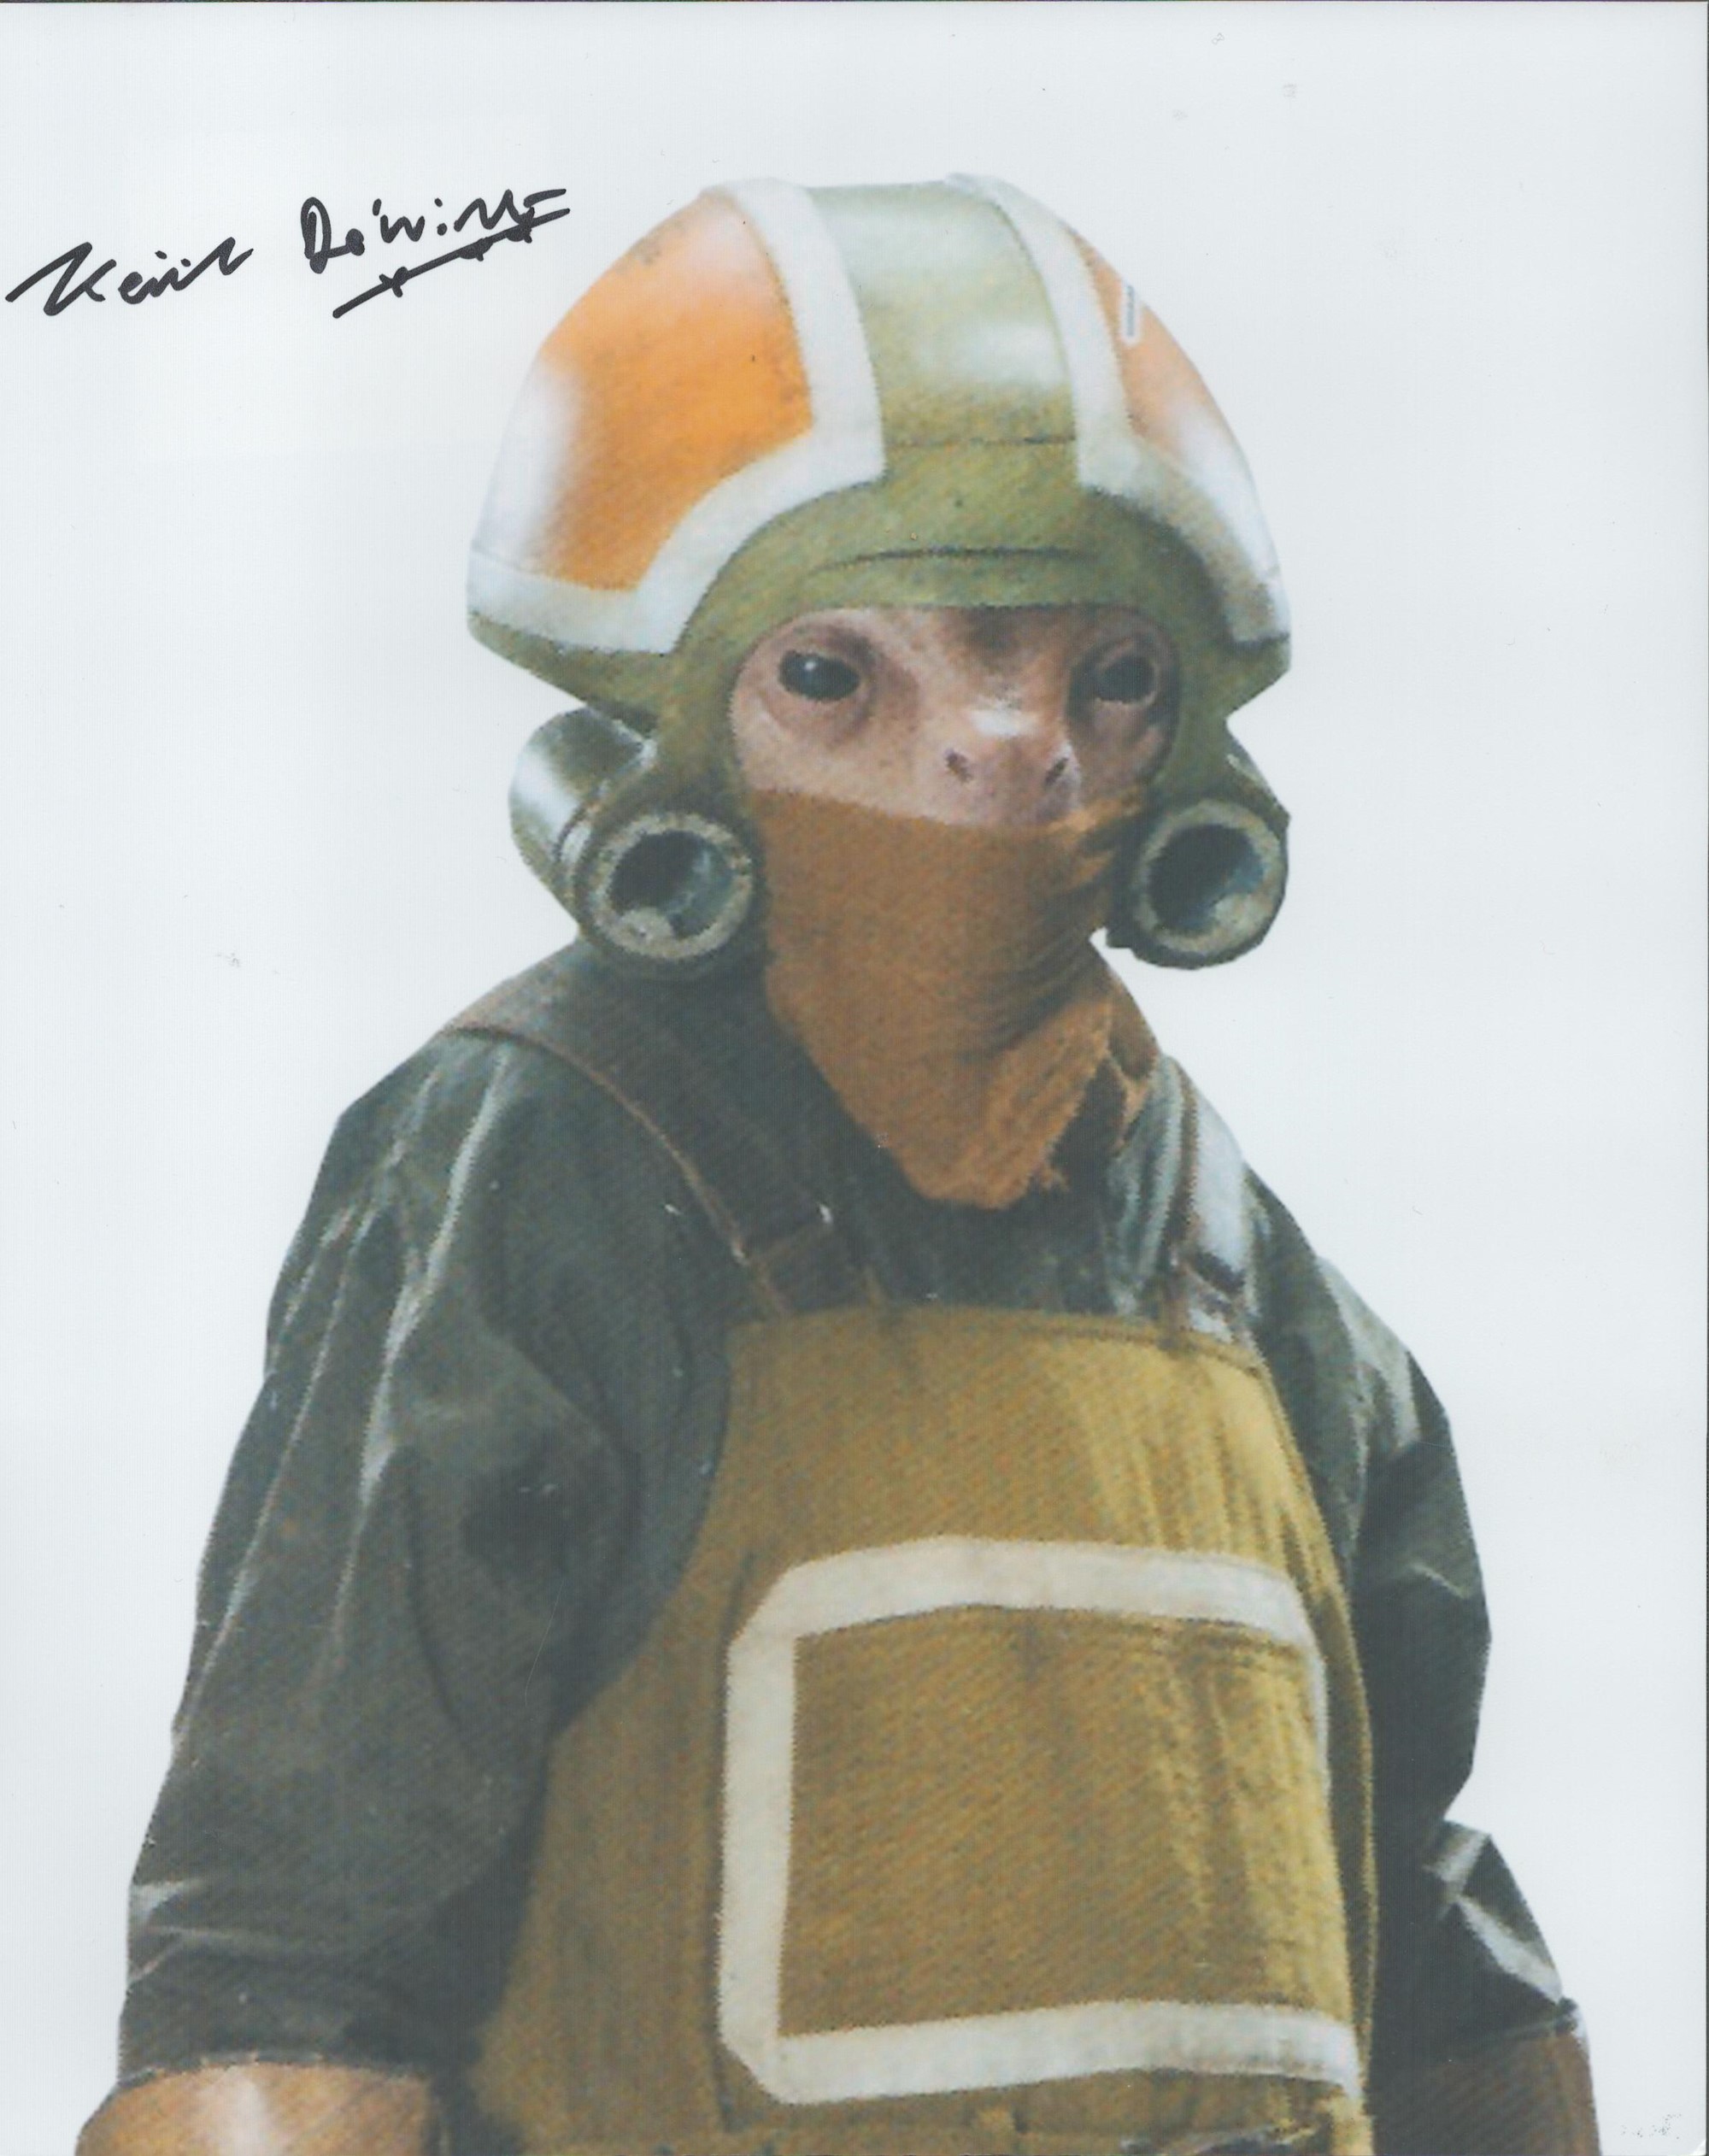 Star Wars Actor, Keith De'Winter signed 10x8 colour photograph. De'Winter is an English actor who